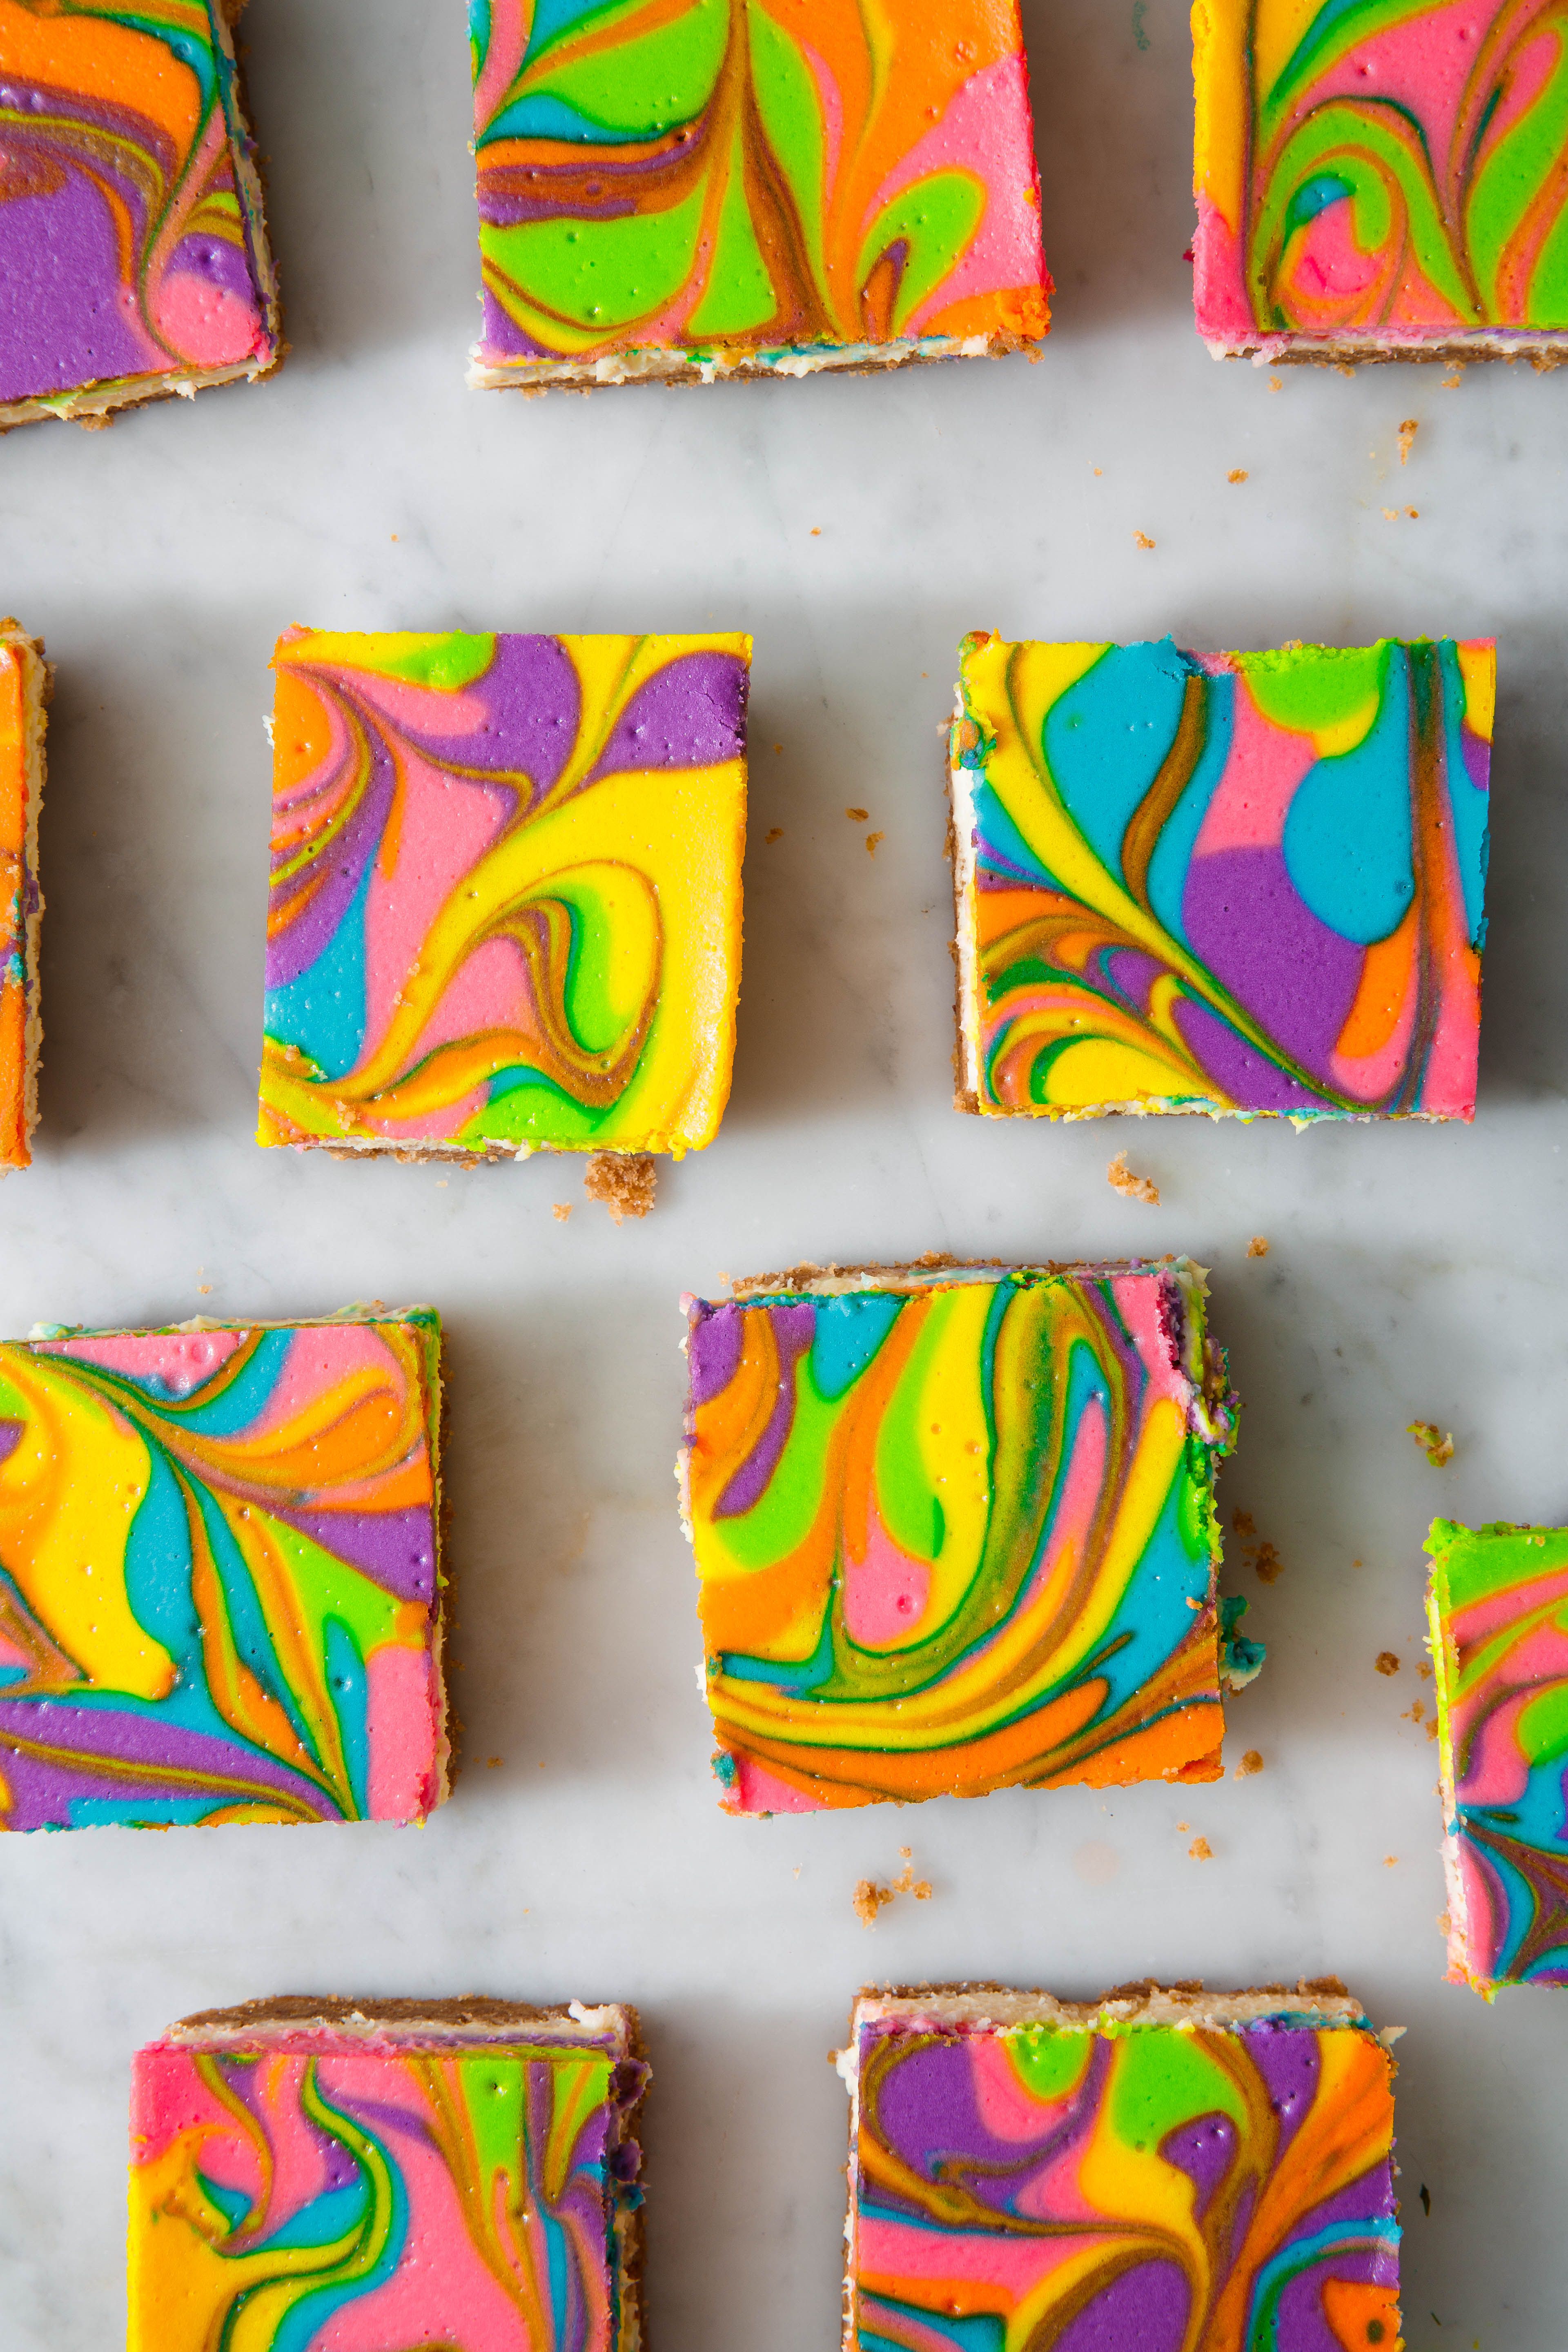 Homemade Rainbow Natural Food Colors - The Confetti Bar